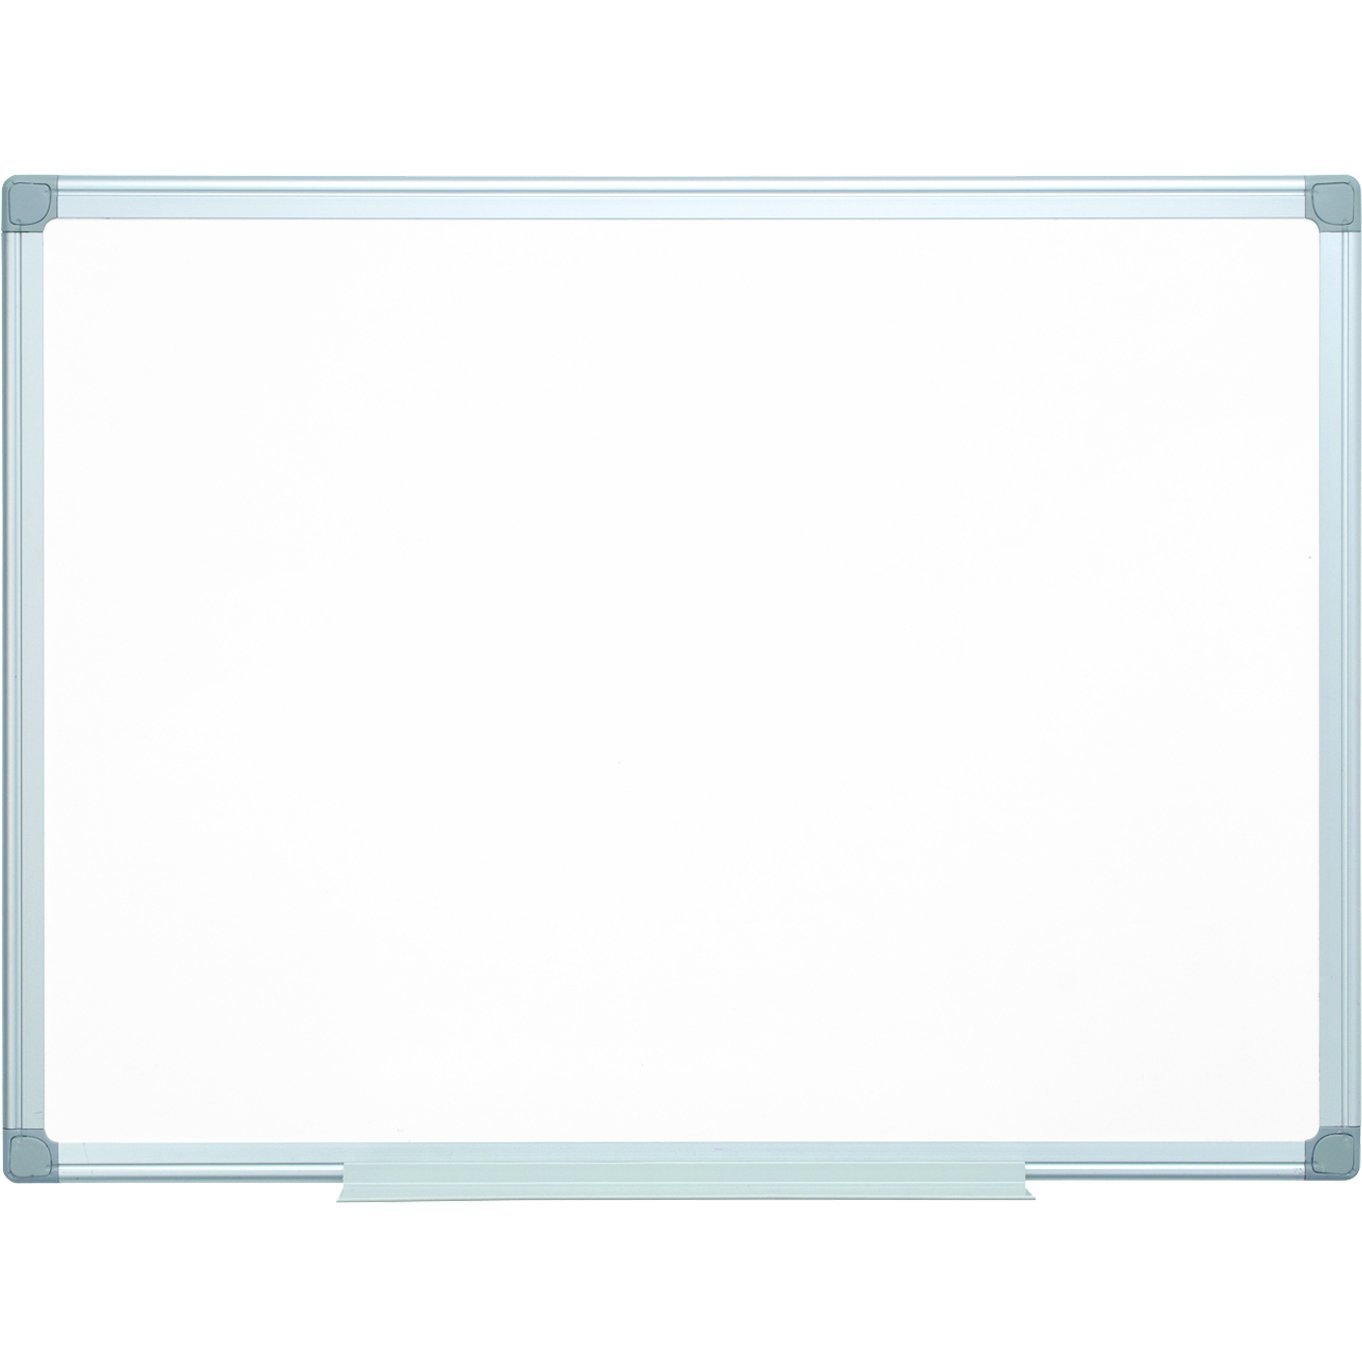 Q-connect lakeret whiteboardtavle 1000 mm x 1500 mm, Stål/Aluminium